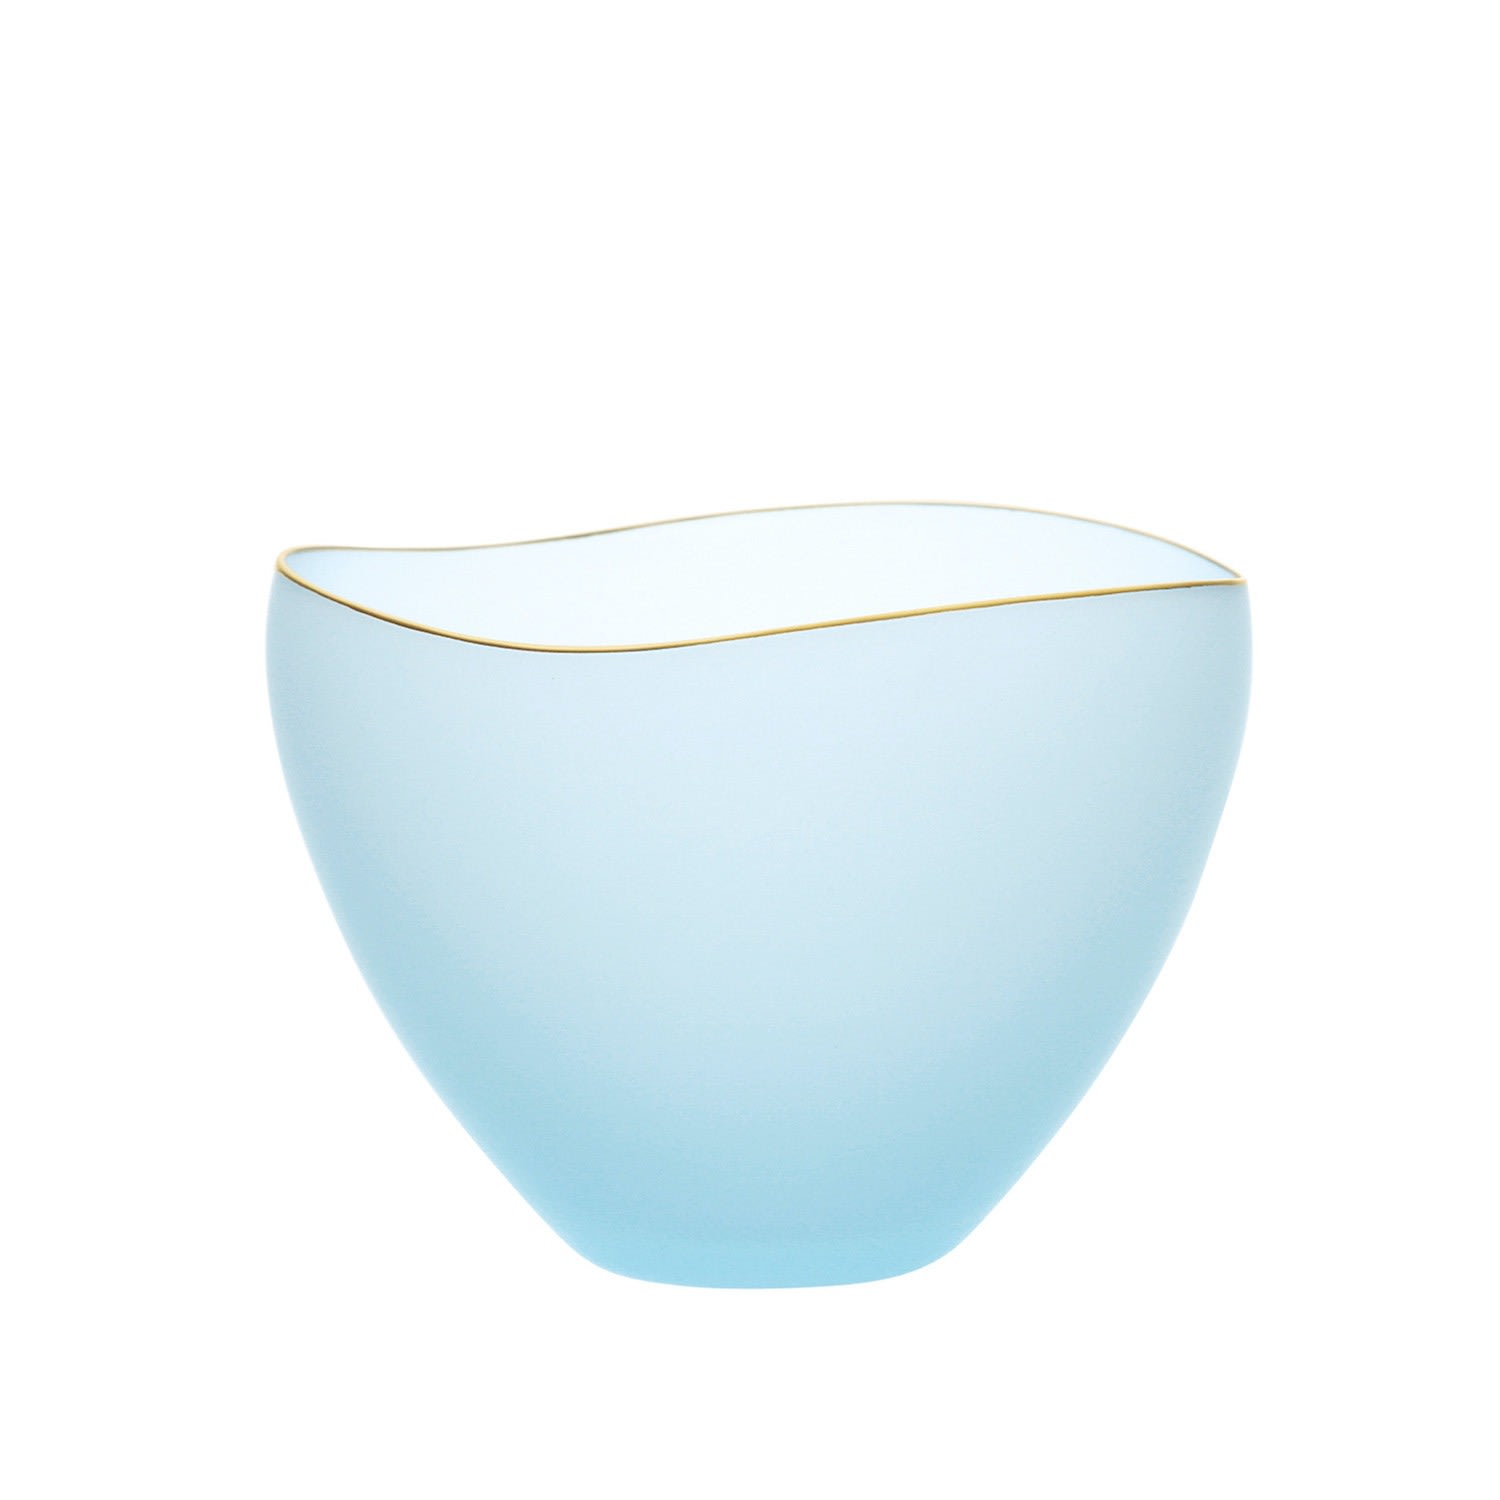 Saki Handcrafted Glass Bowl With Gold Rim - Blue 3.7" Sghr Sugahara